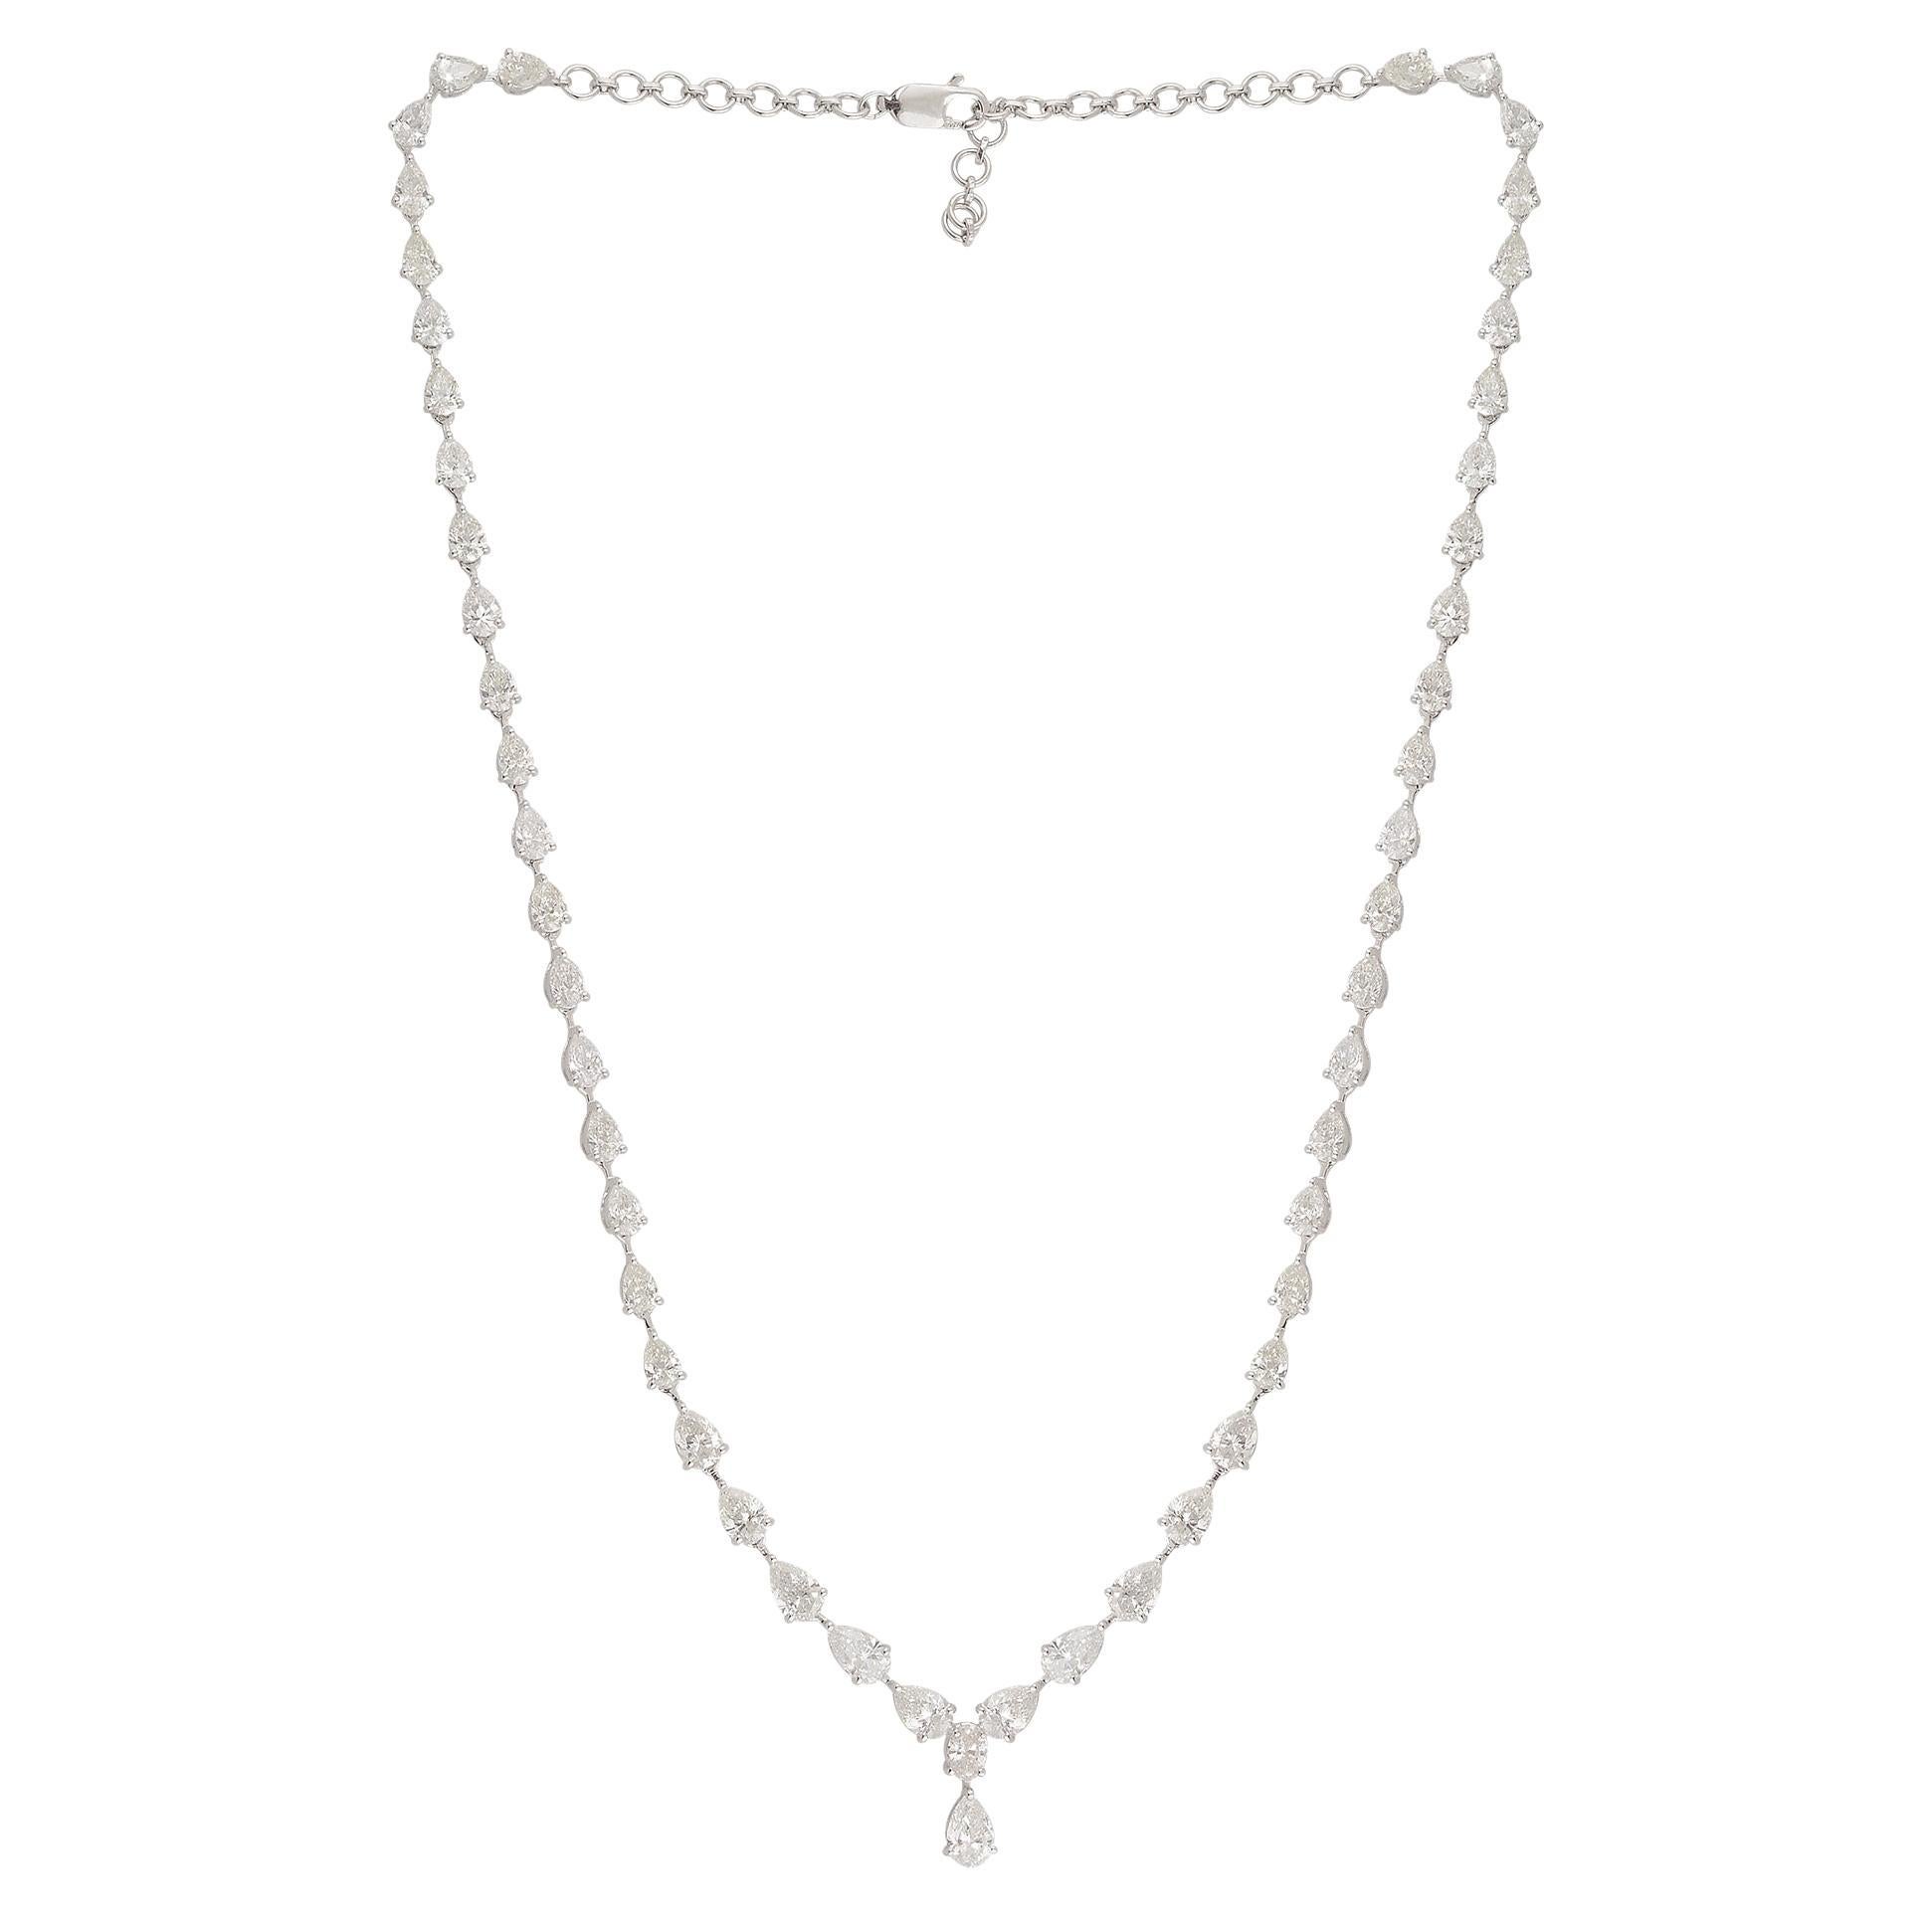 12.40 Carat Pear Diamond Charm Necklace 14 Karat White Gold Handmade Jewelry For Sale